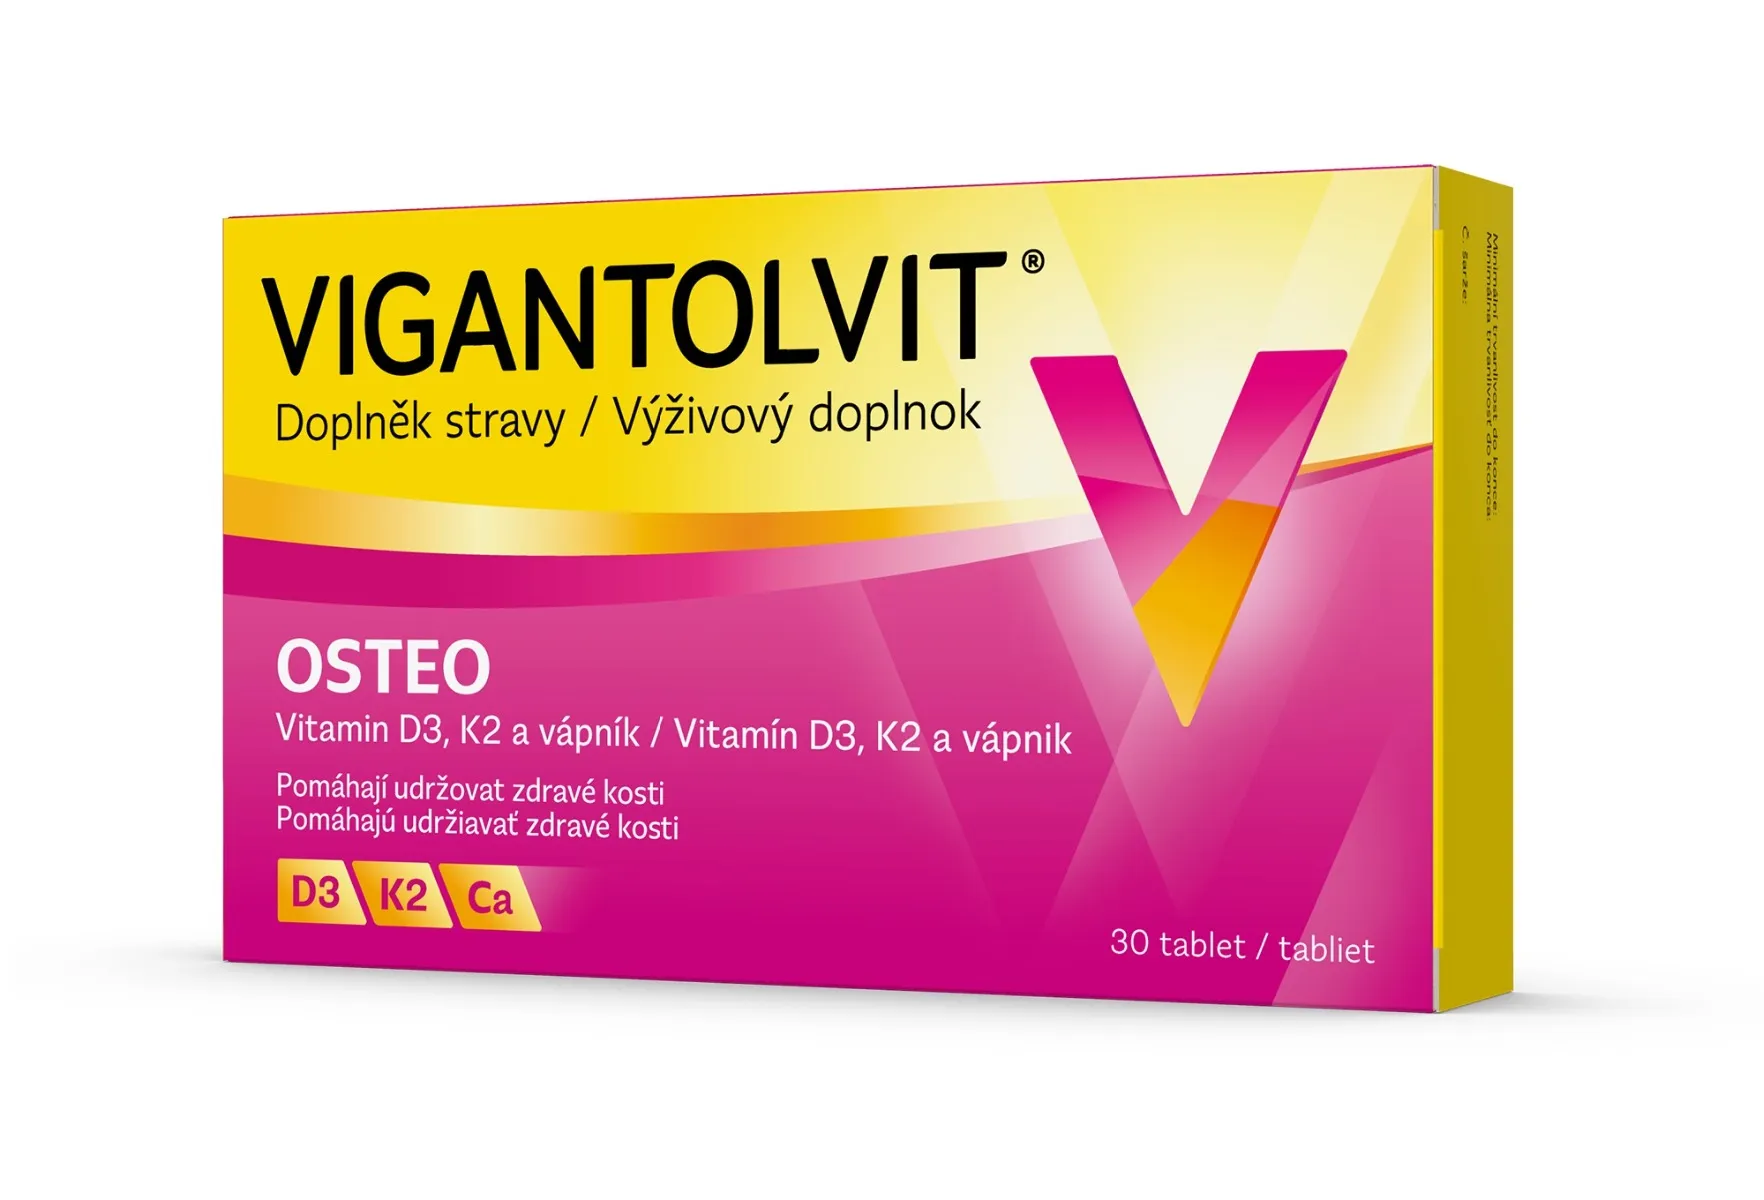 VIGANTOLVIT Osteo